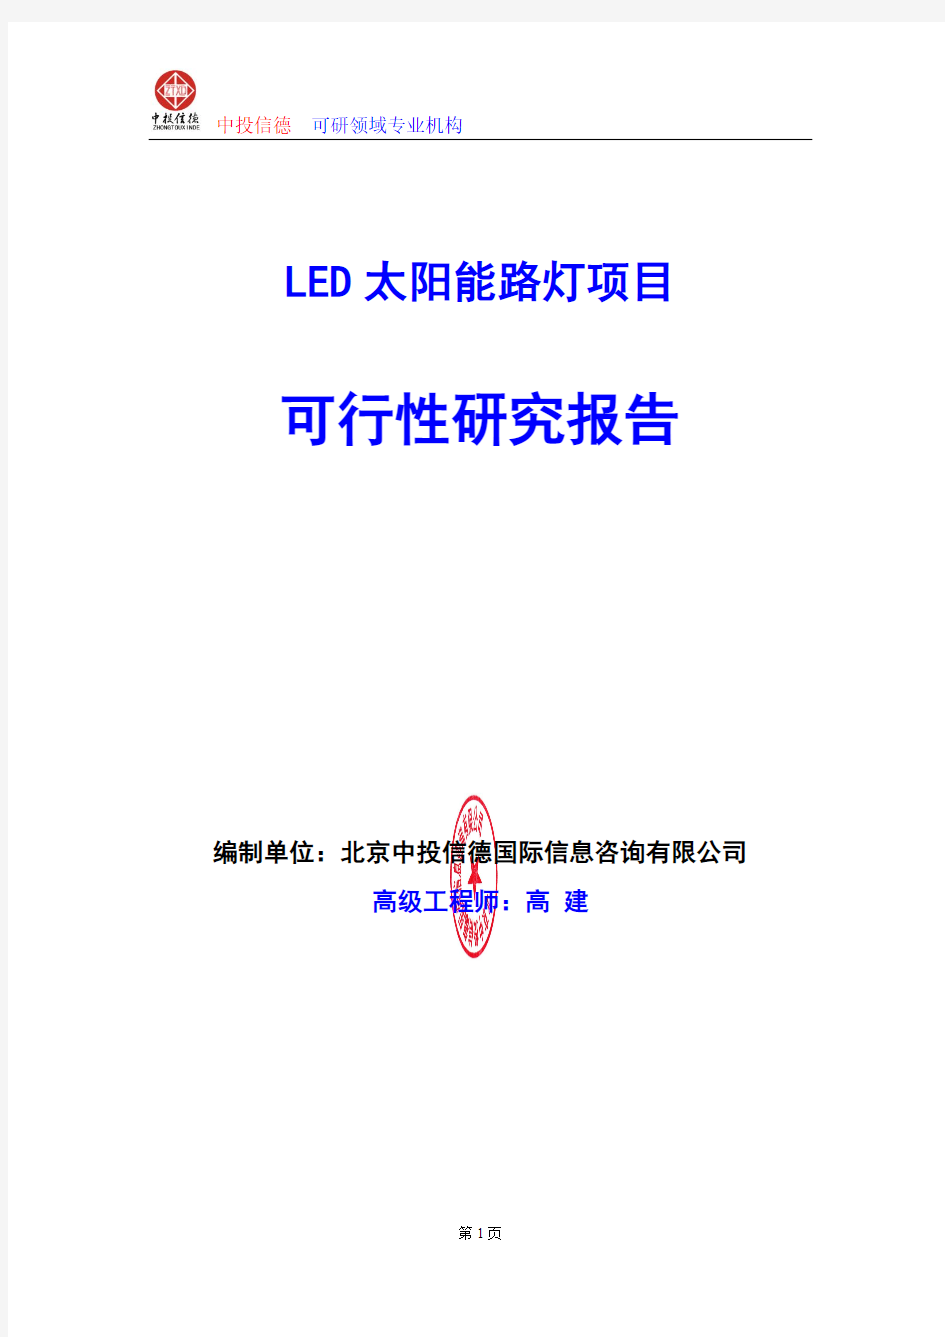 LED太阳能路灯项目可行性研究报告编写格式及参考(模板word)